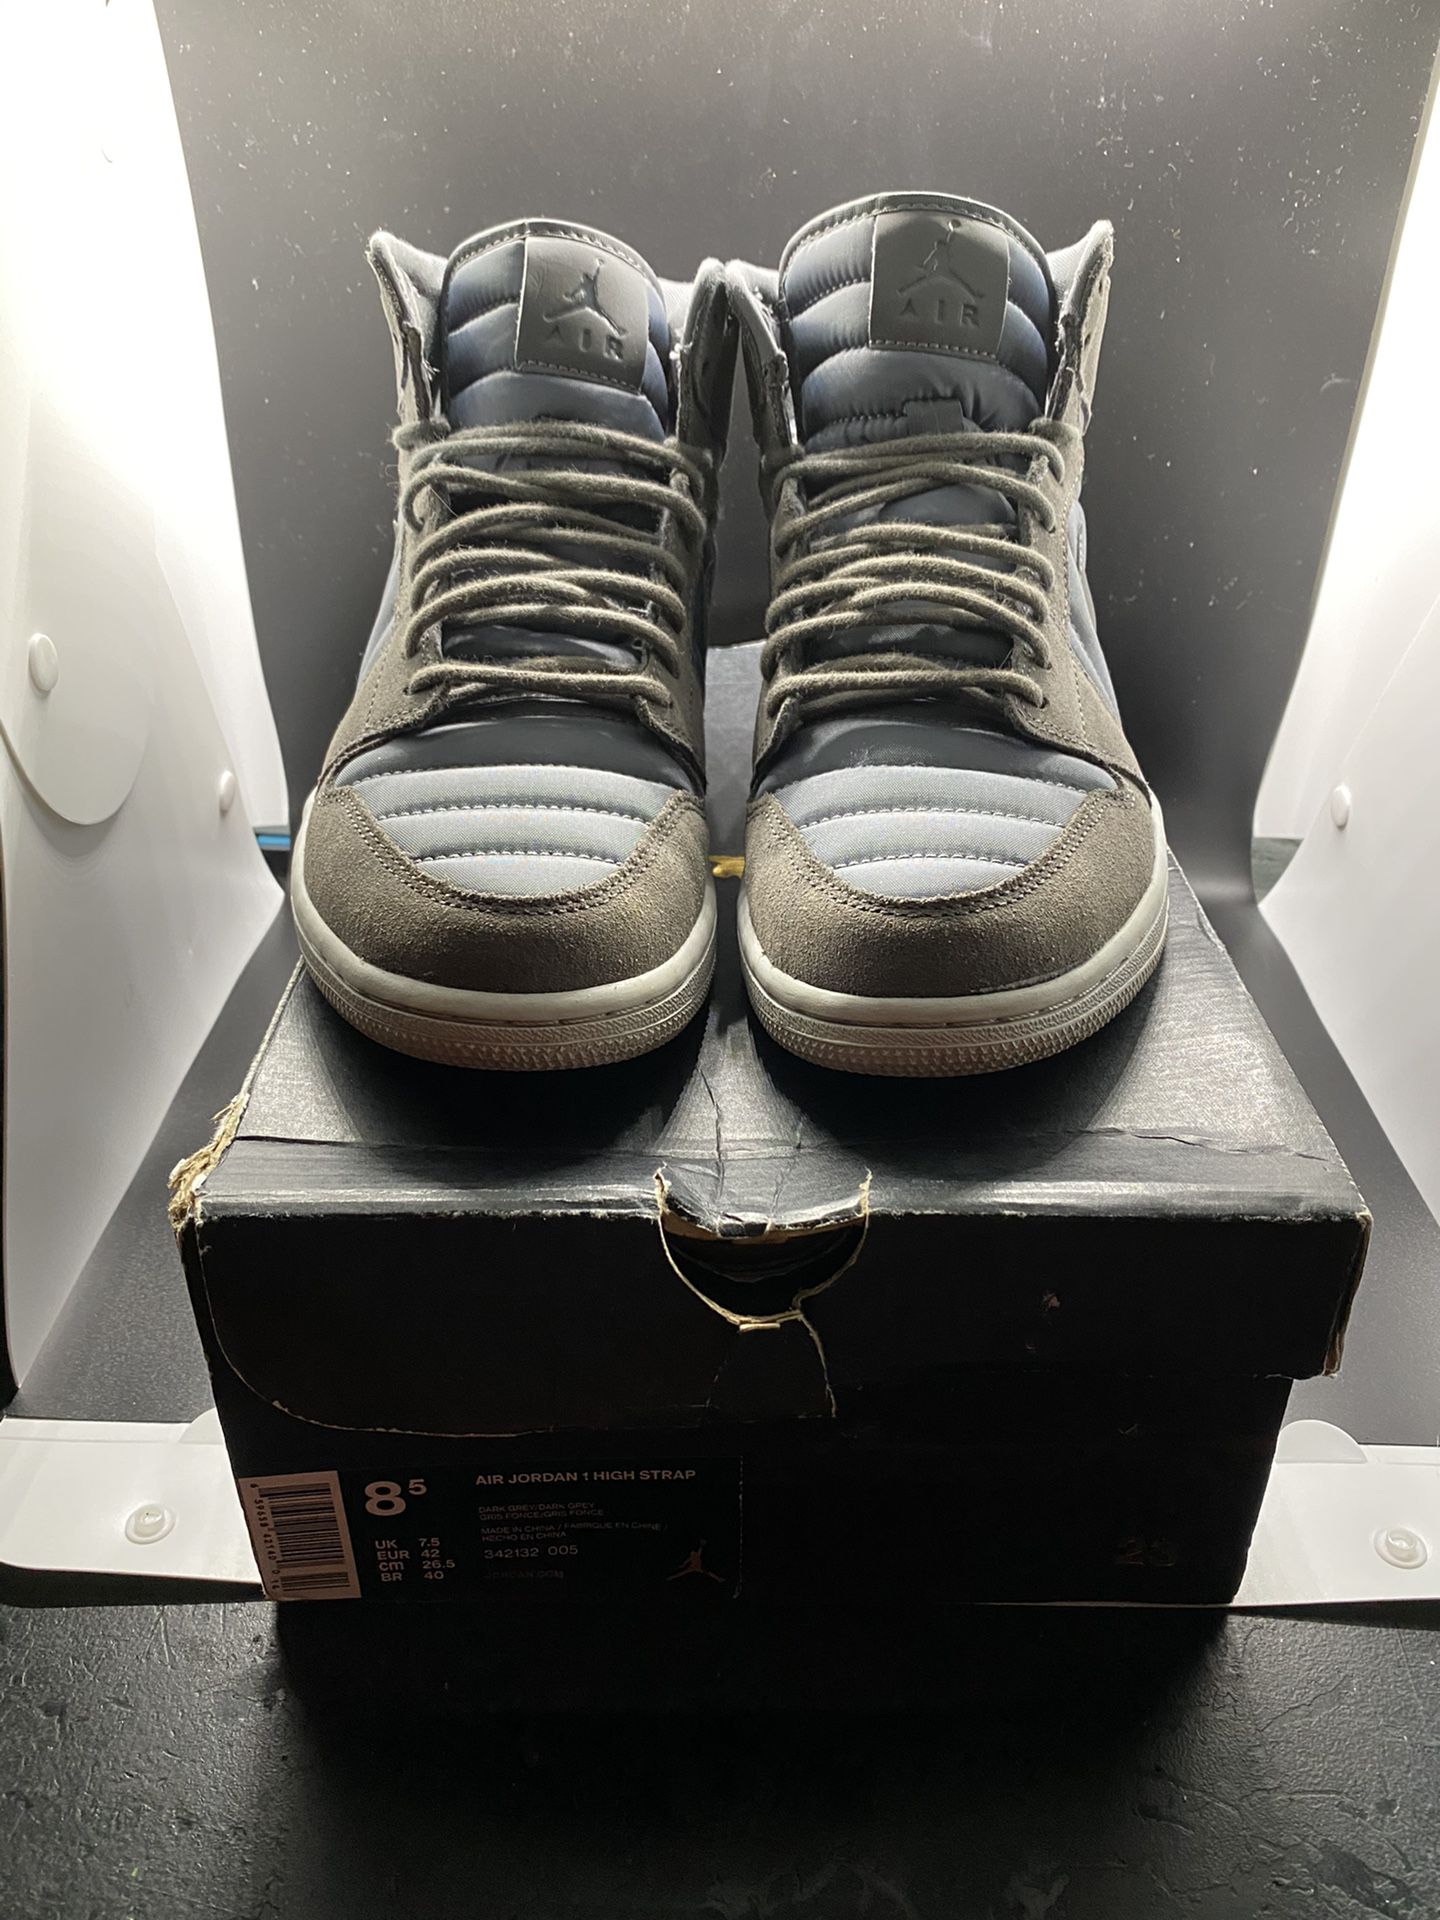 Men’s Air Jordan high strap grey size 8.5